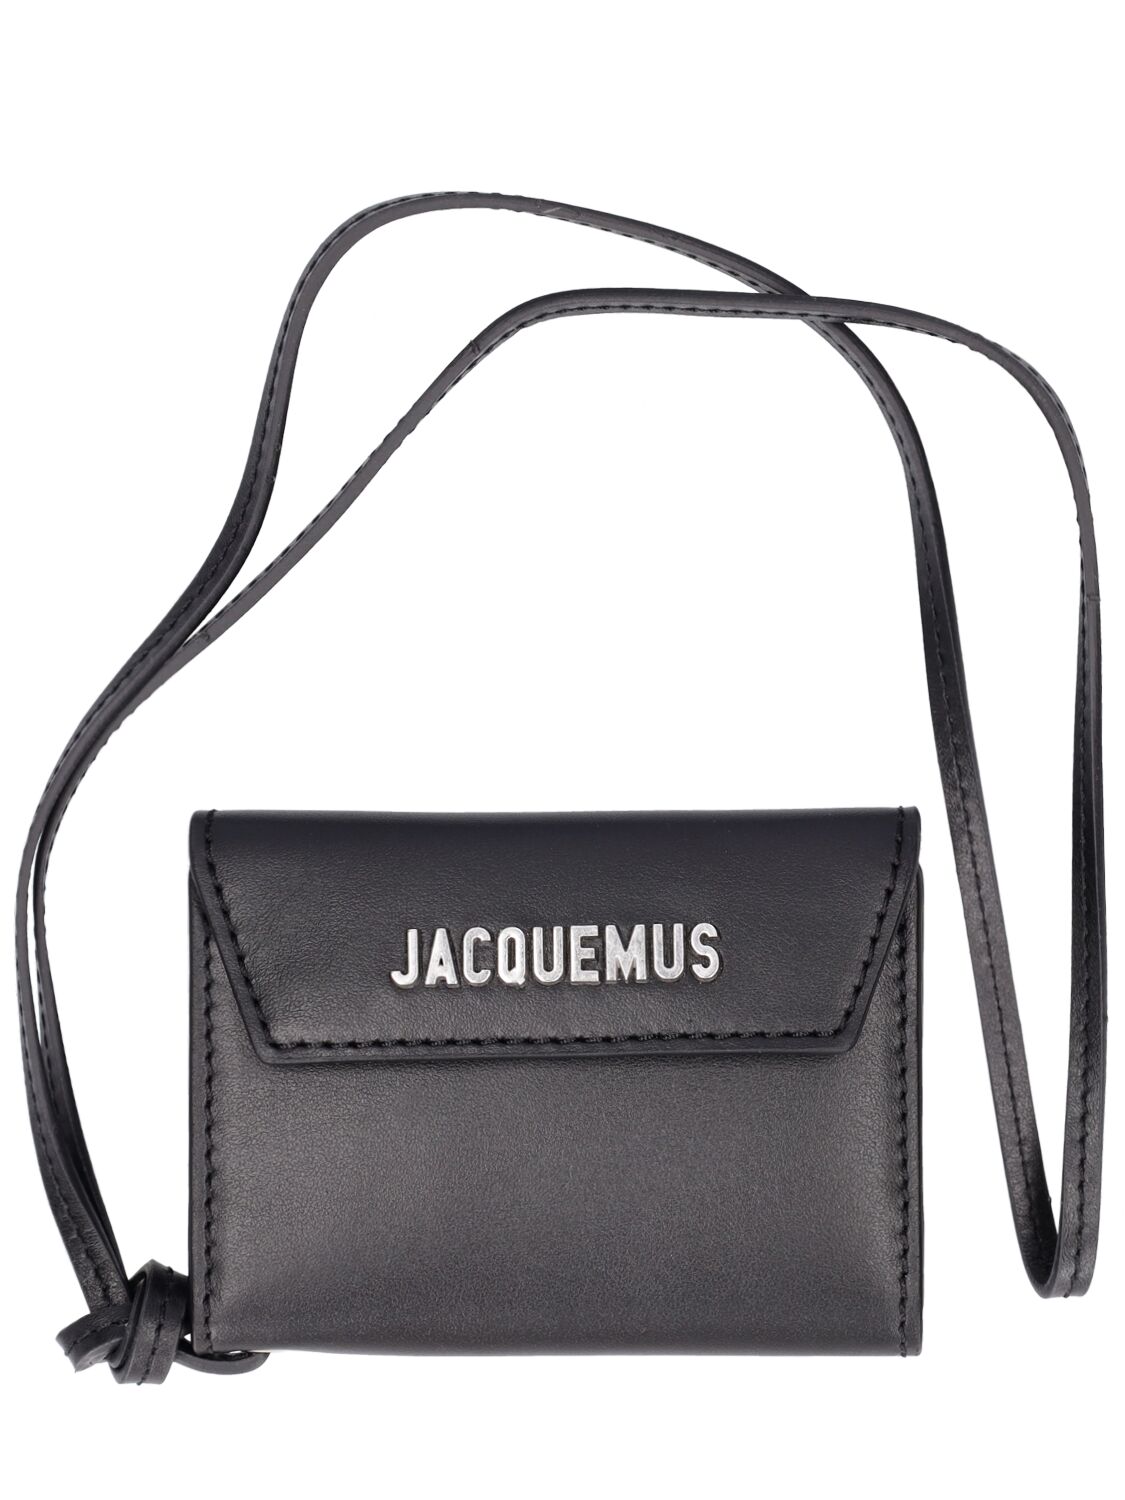 Jacquemus Le Porte 皮革钱包 In Black